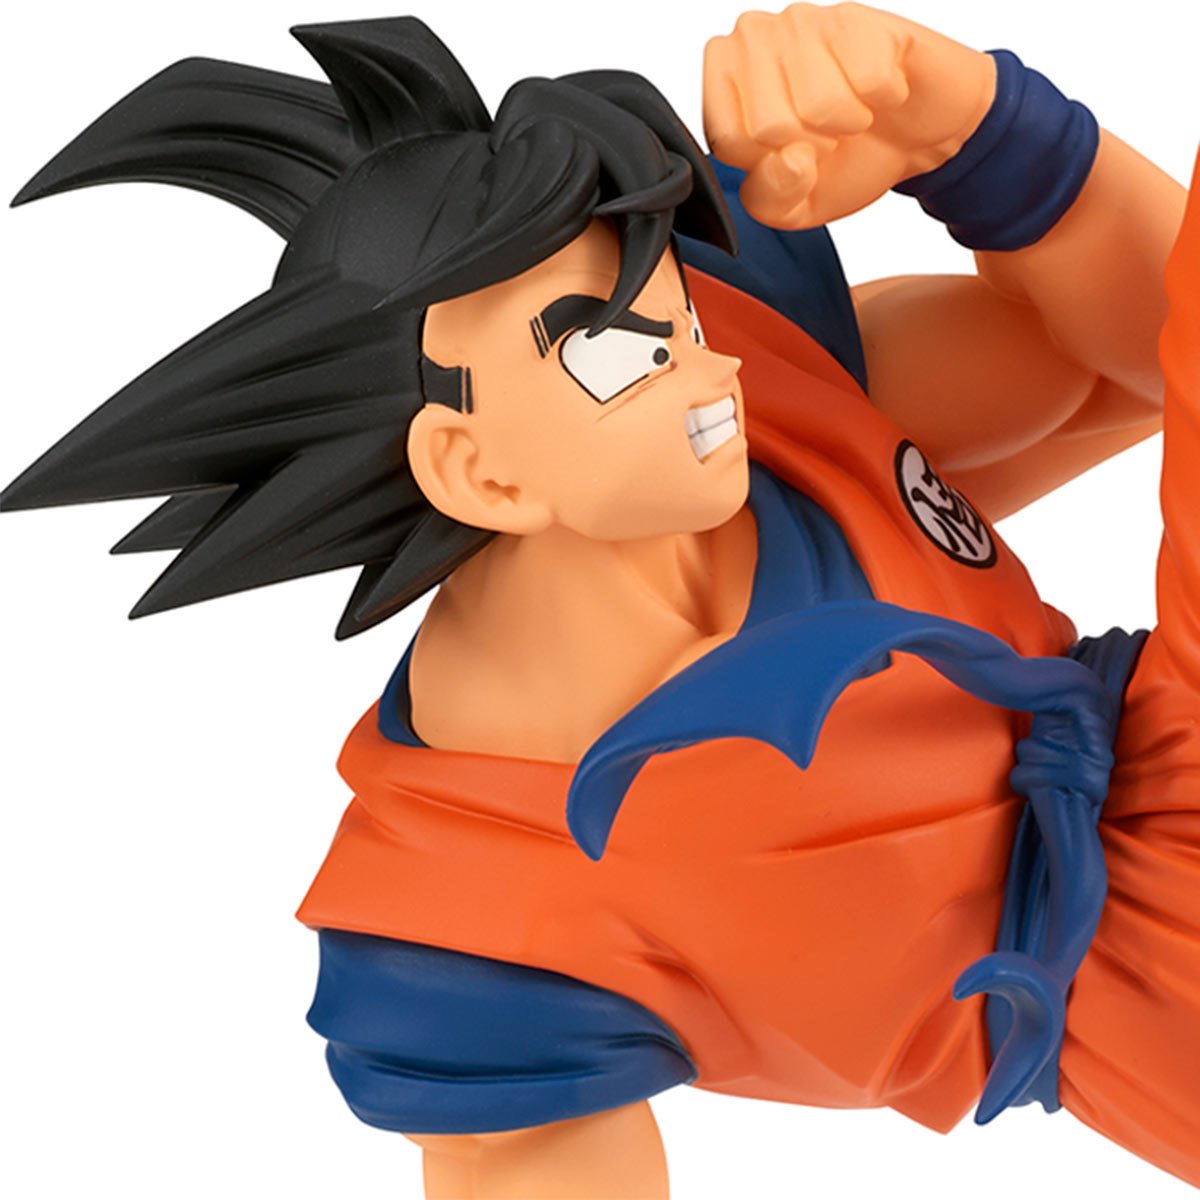 Dragon Ball Z Son Goku Match Makers figure, Banpresto